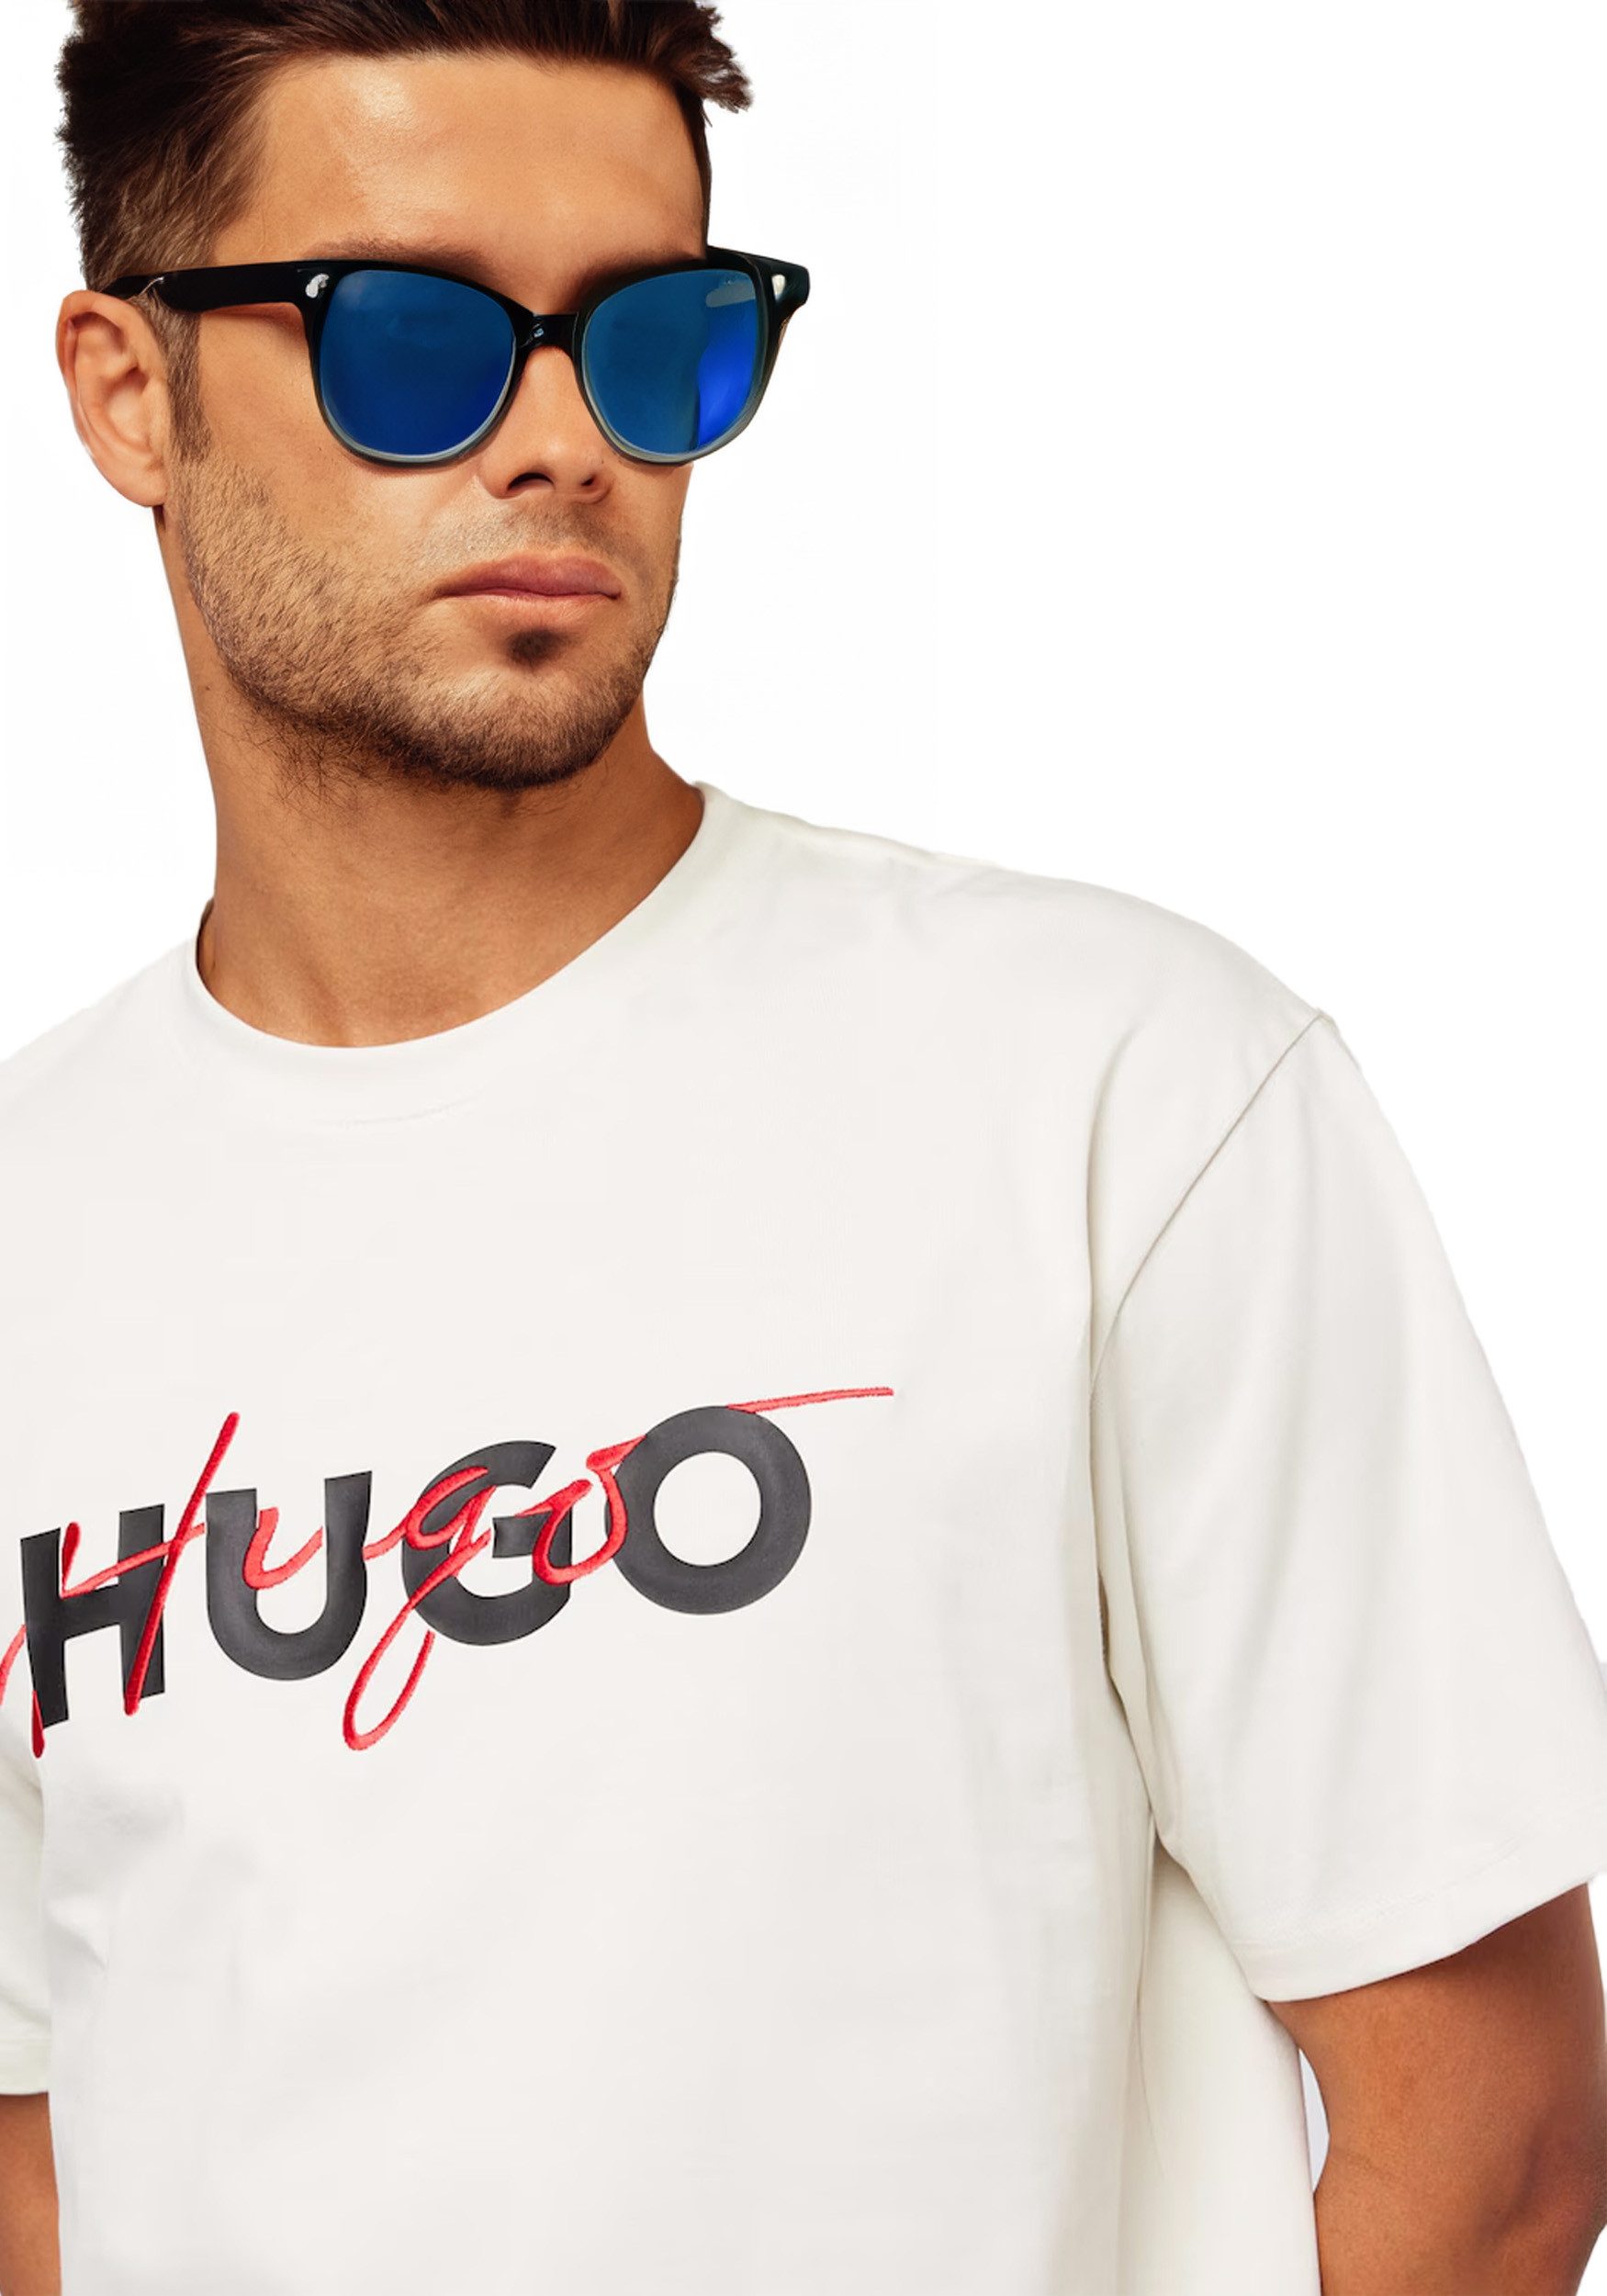 HUGO T-Shirt DAKAISHI Hugo Boss Herren Shirt Rundhals mit doppel Logo in Stick und Print